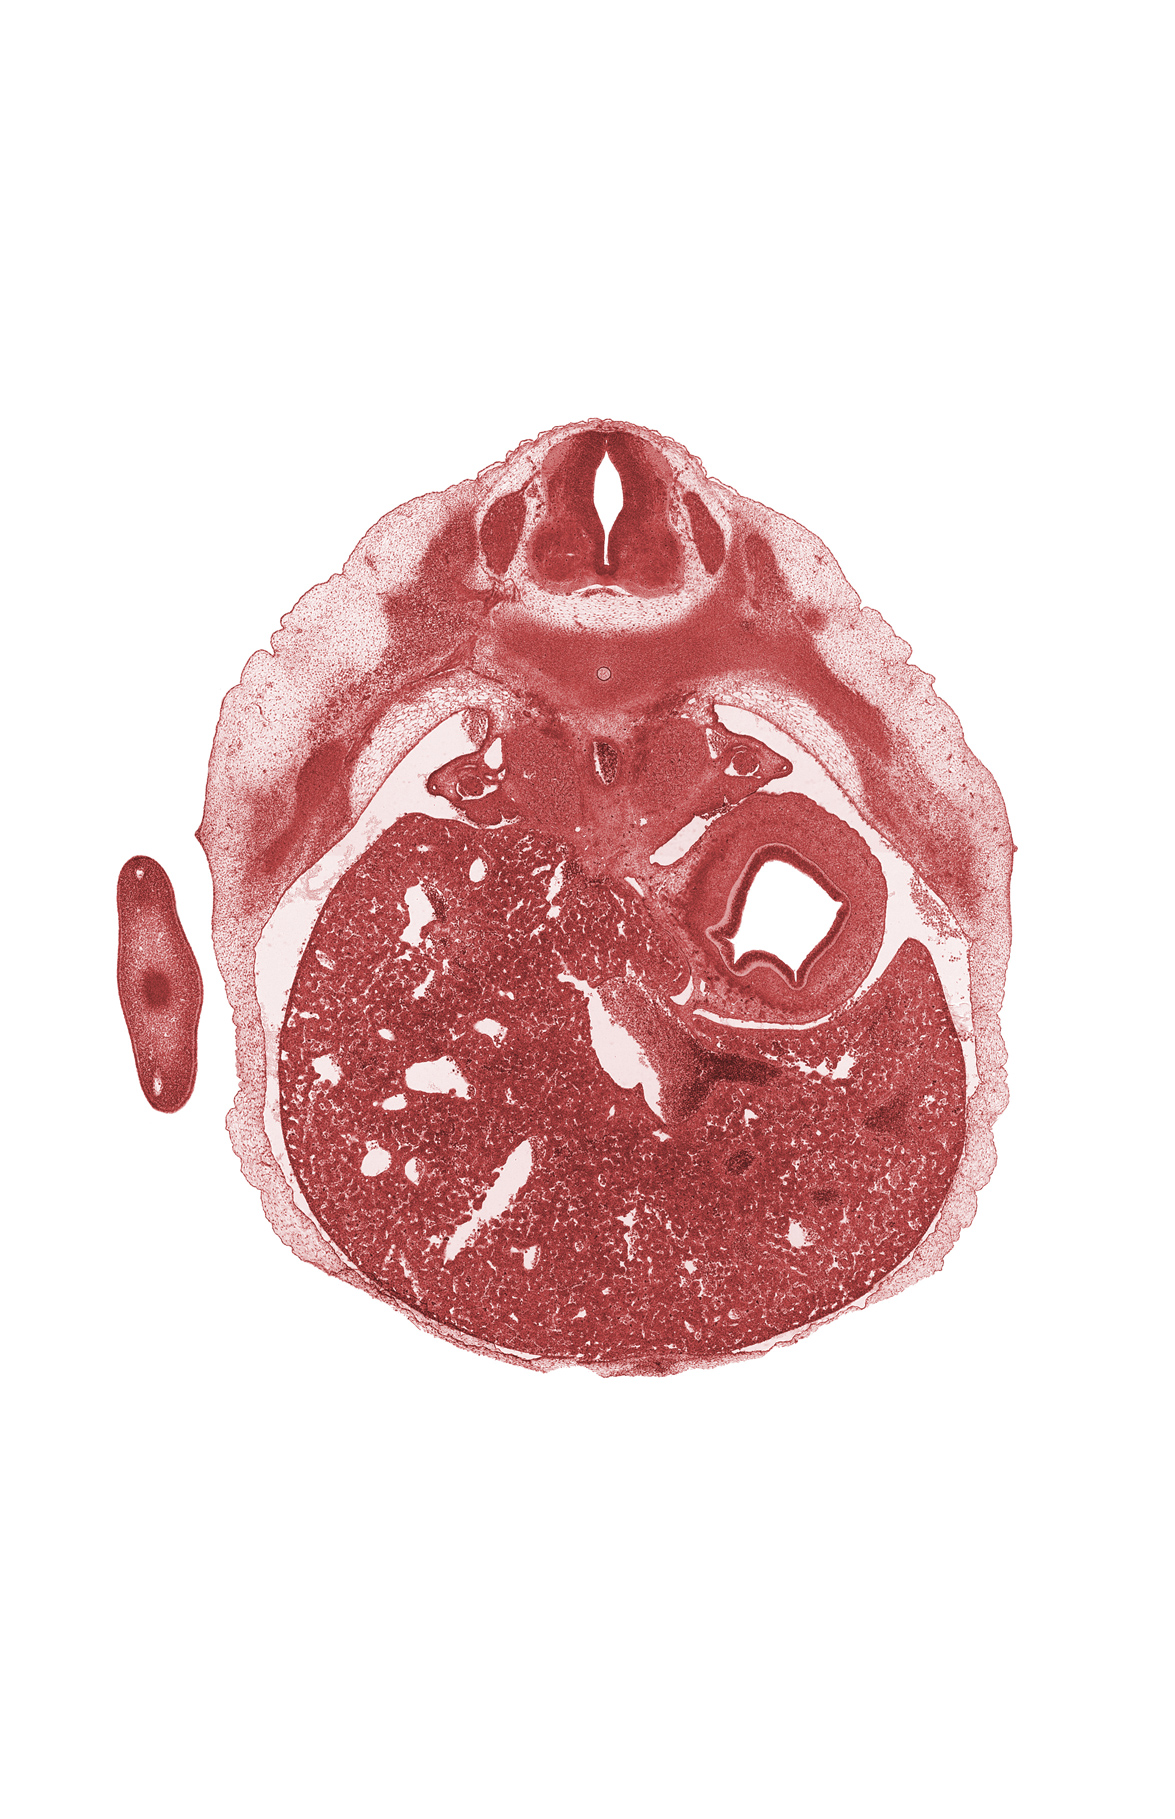 T-7 spinal ganglion, edge of dorsal mesogastrium, intermediate zone, left lobe of liver, liver prominence, lumen of body of stomach, marginal zone, peritoneal cavity, postcardinal vein, rib 8, right lobe of liver, suprarenal gland, ventricular zone